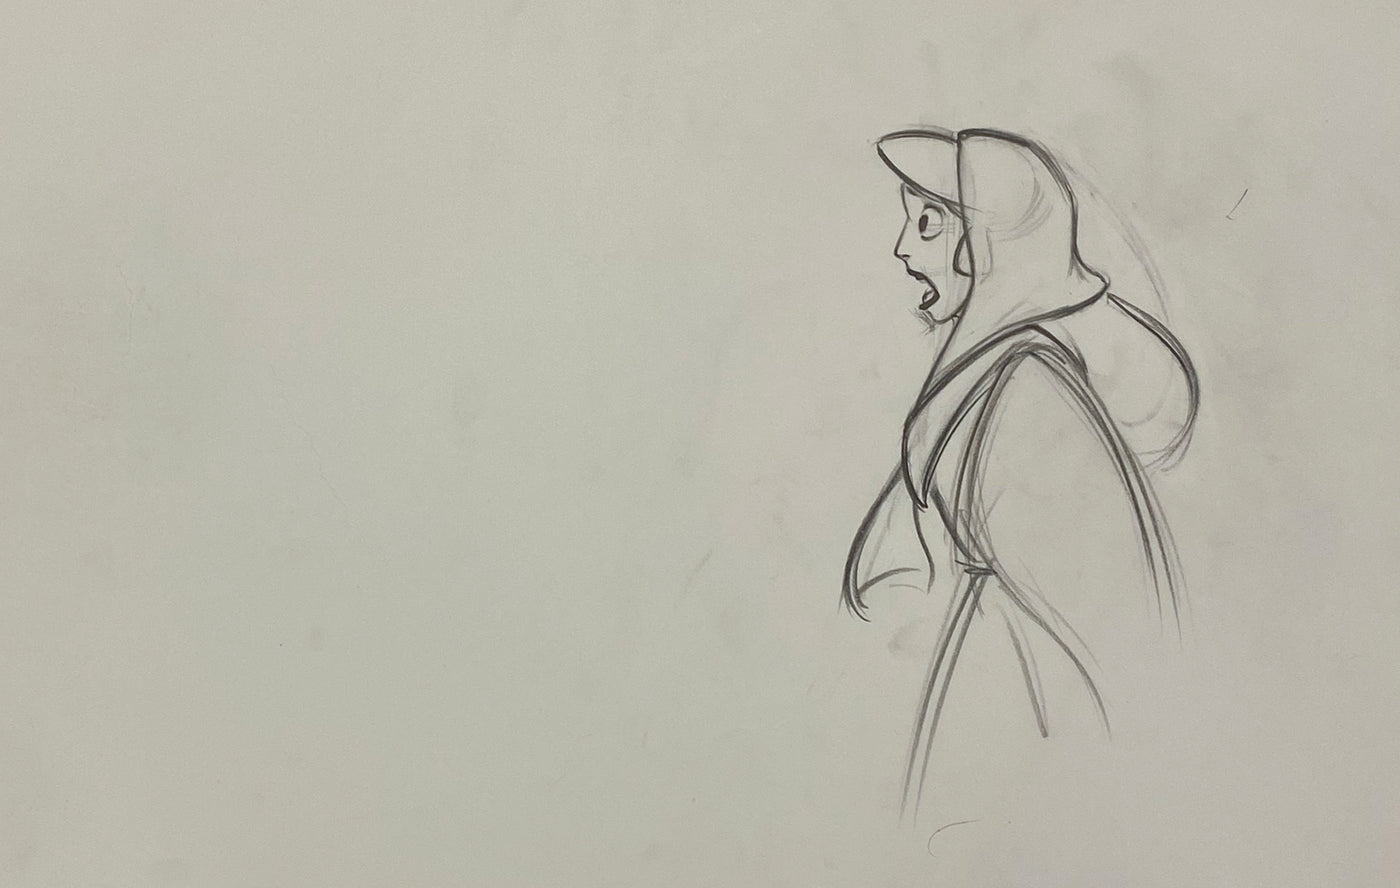 Original Walt Disney Production Drawing from Aladdin featuring Jasmine